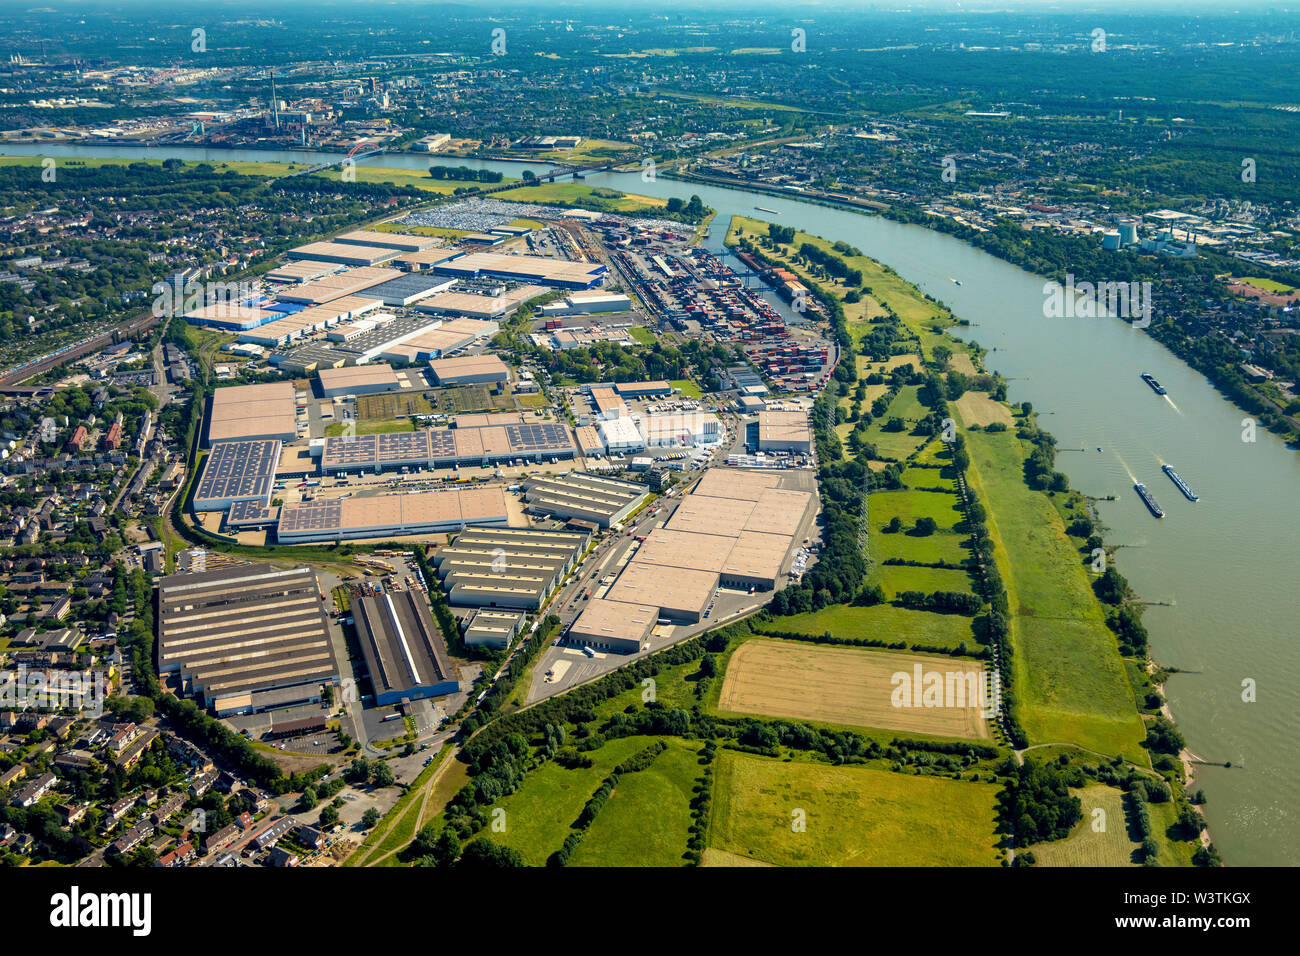 Aerial view of the logistics area Logport Rheinhausen, Logport 1 on the Rhine with Rheinhafen Rheinhausen, DIT Duisburg Intermodal Terminal GmbH, D3T Stock Photo